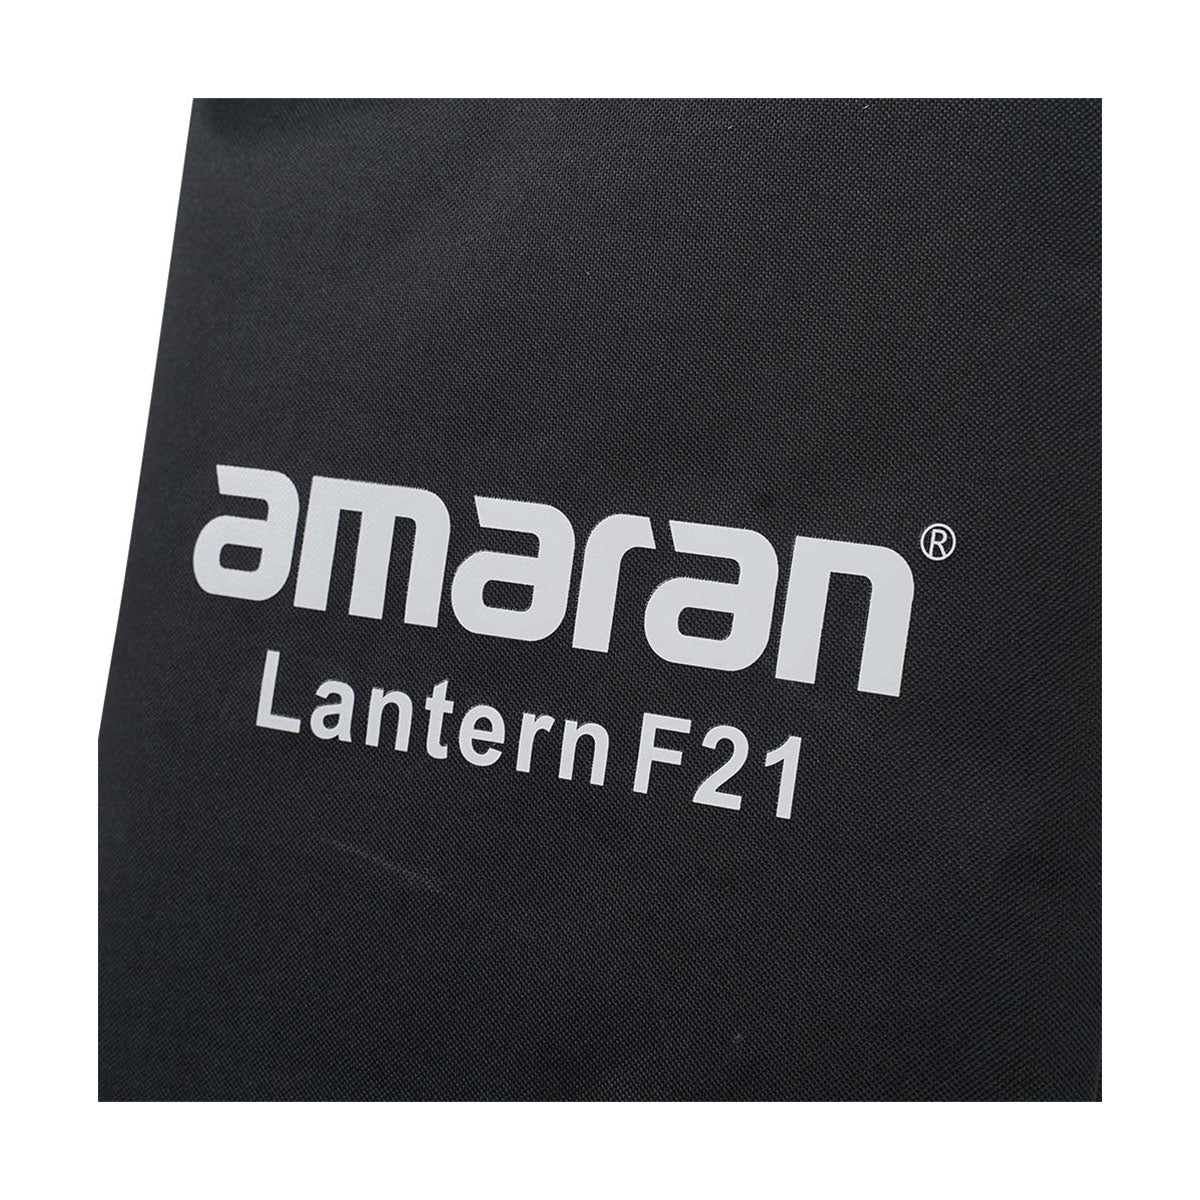 Amaran Lantern for F21